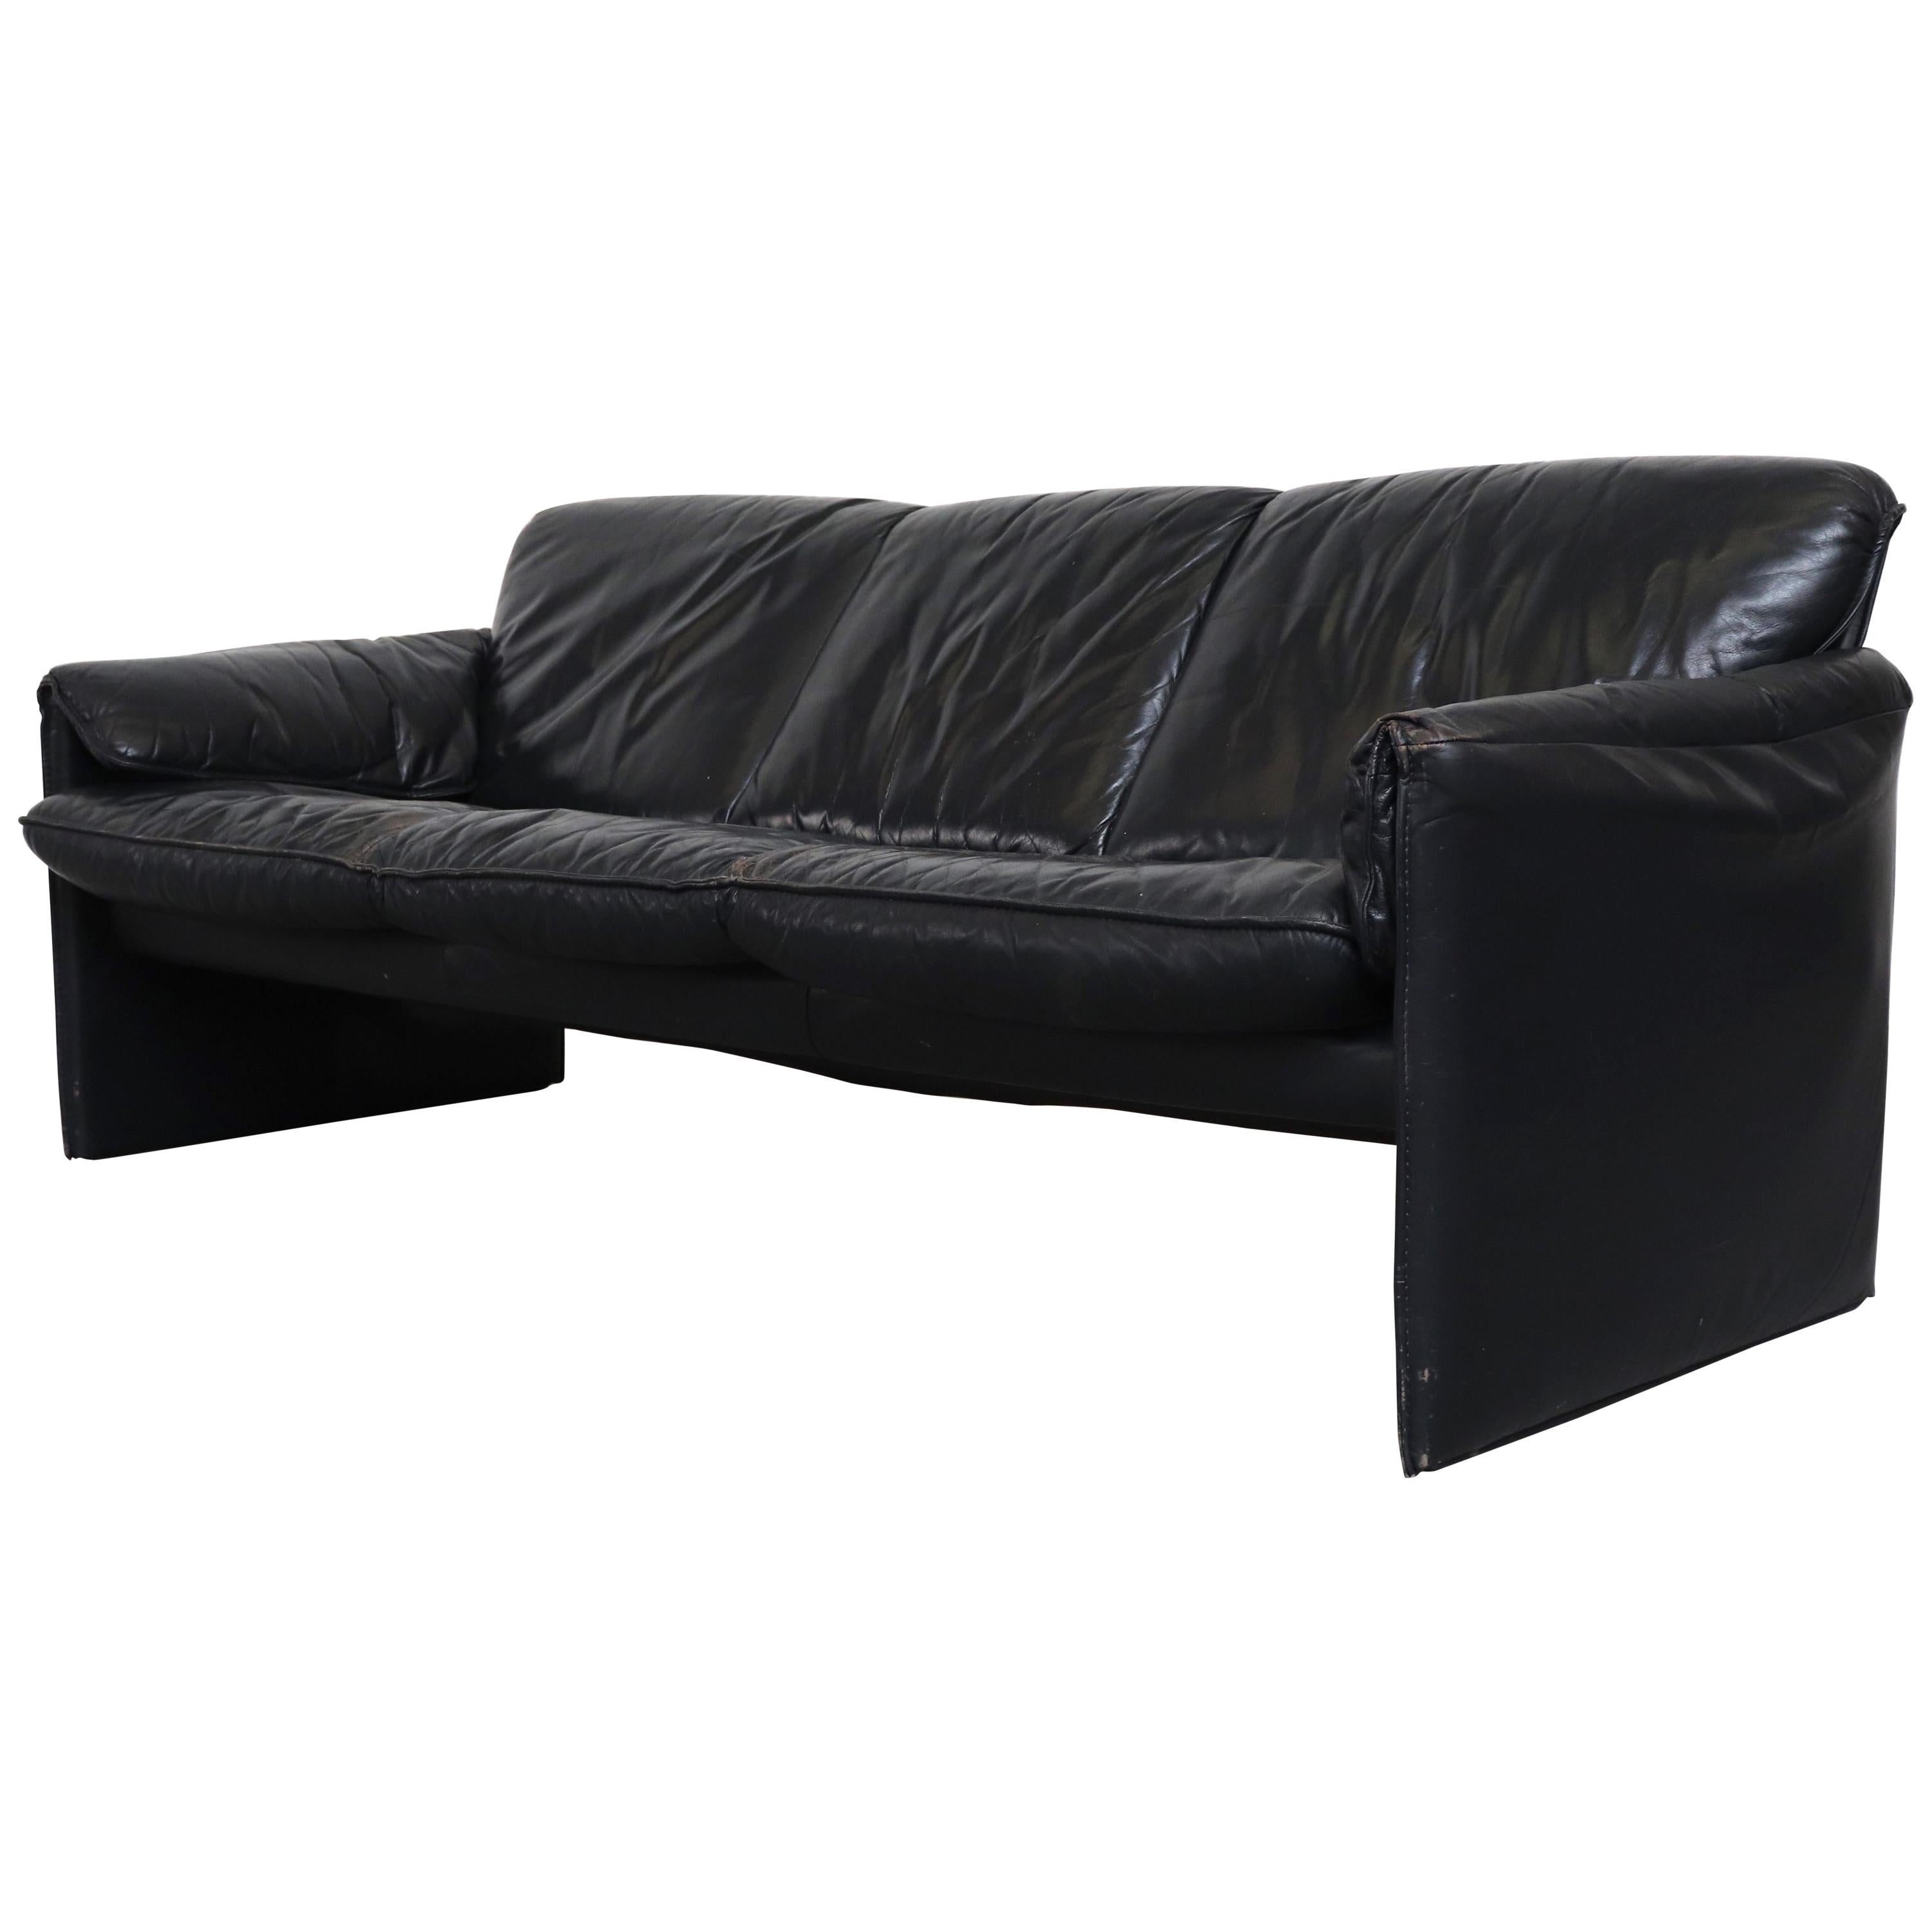 Leolux 'Bora Bora' Black Leather 3-Seat Sofa